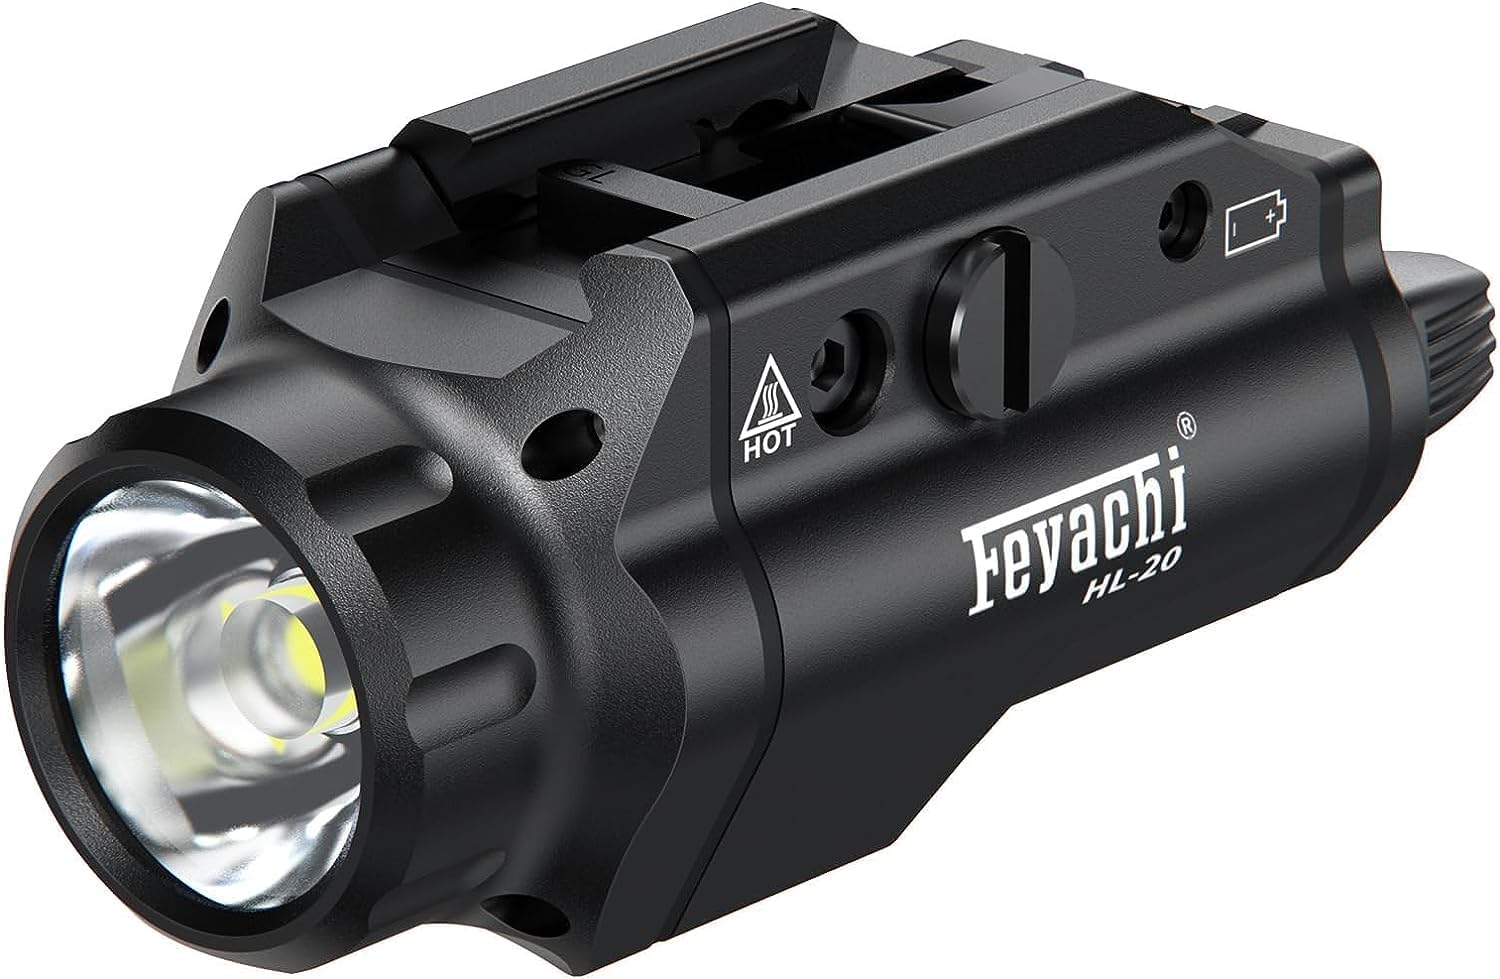 Feyachi HL-20 Pistol Light 1500 Lumen LED Weapon Light Compact